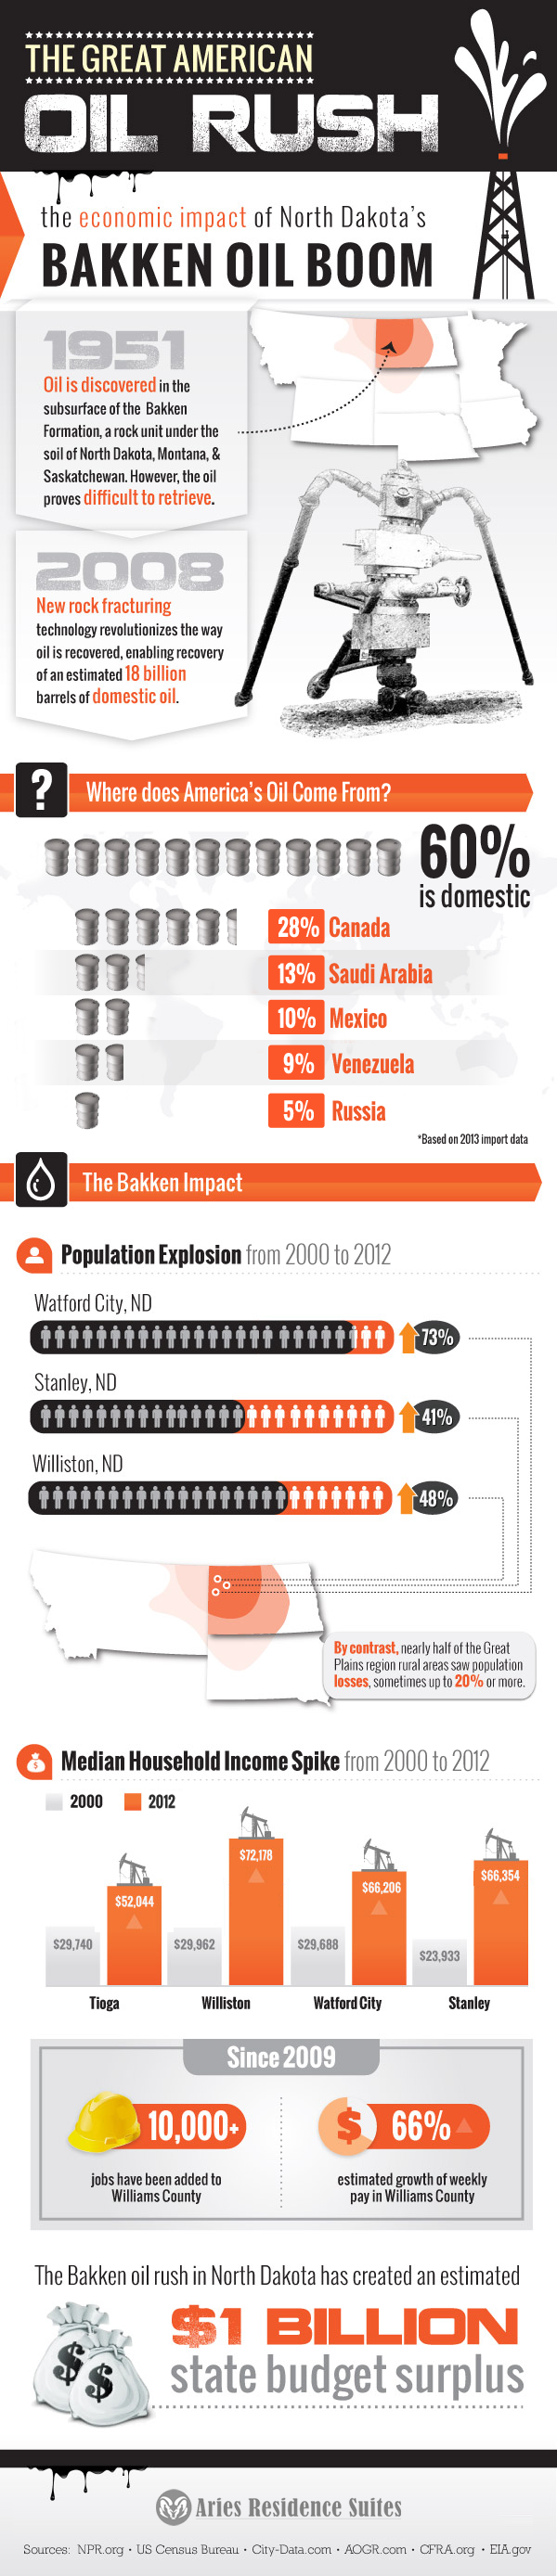 The Economics of the Bakken Oil Boom